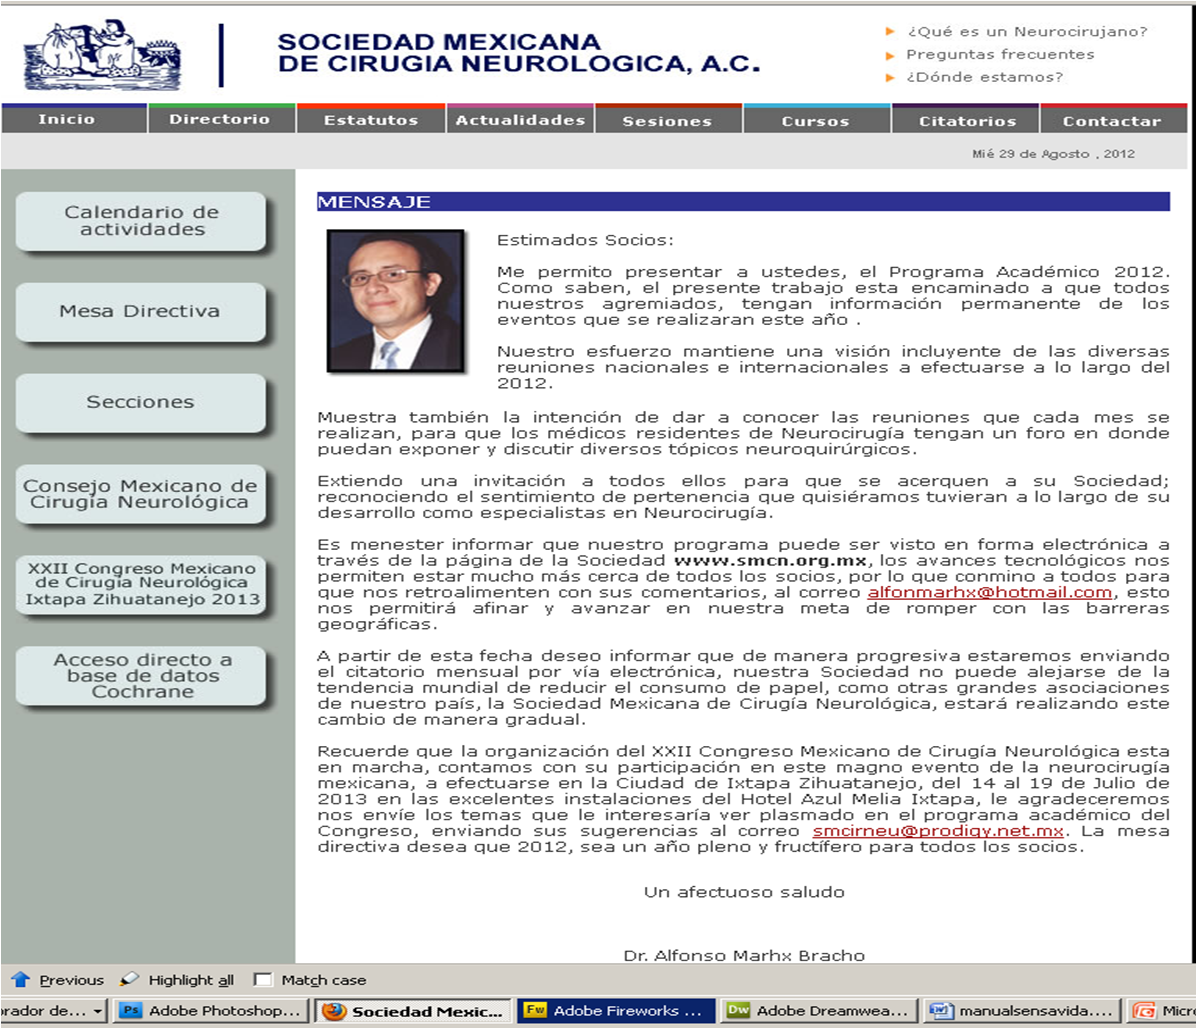 Sociedad Mexicana de Cirugia Neurologica